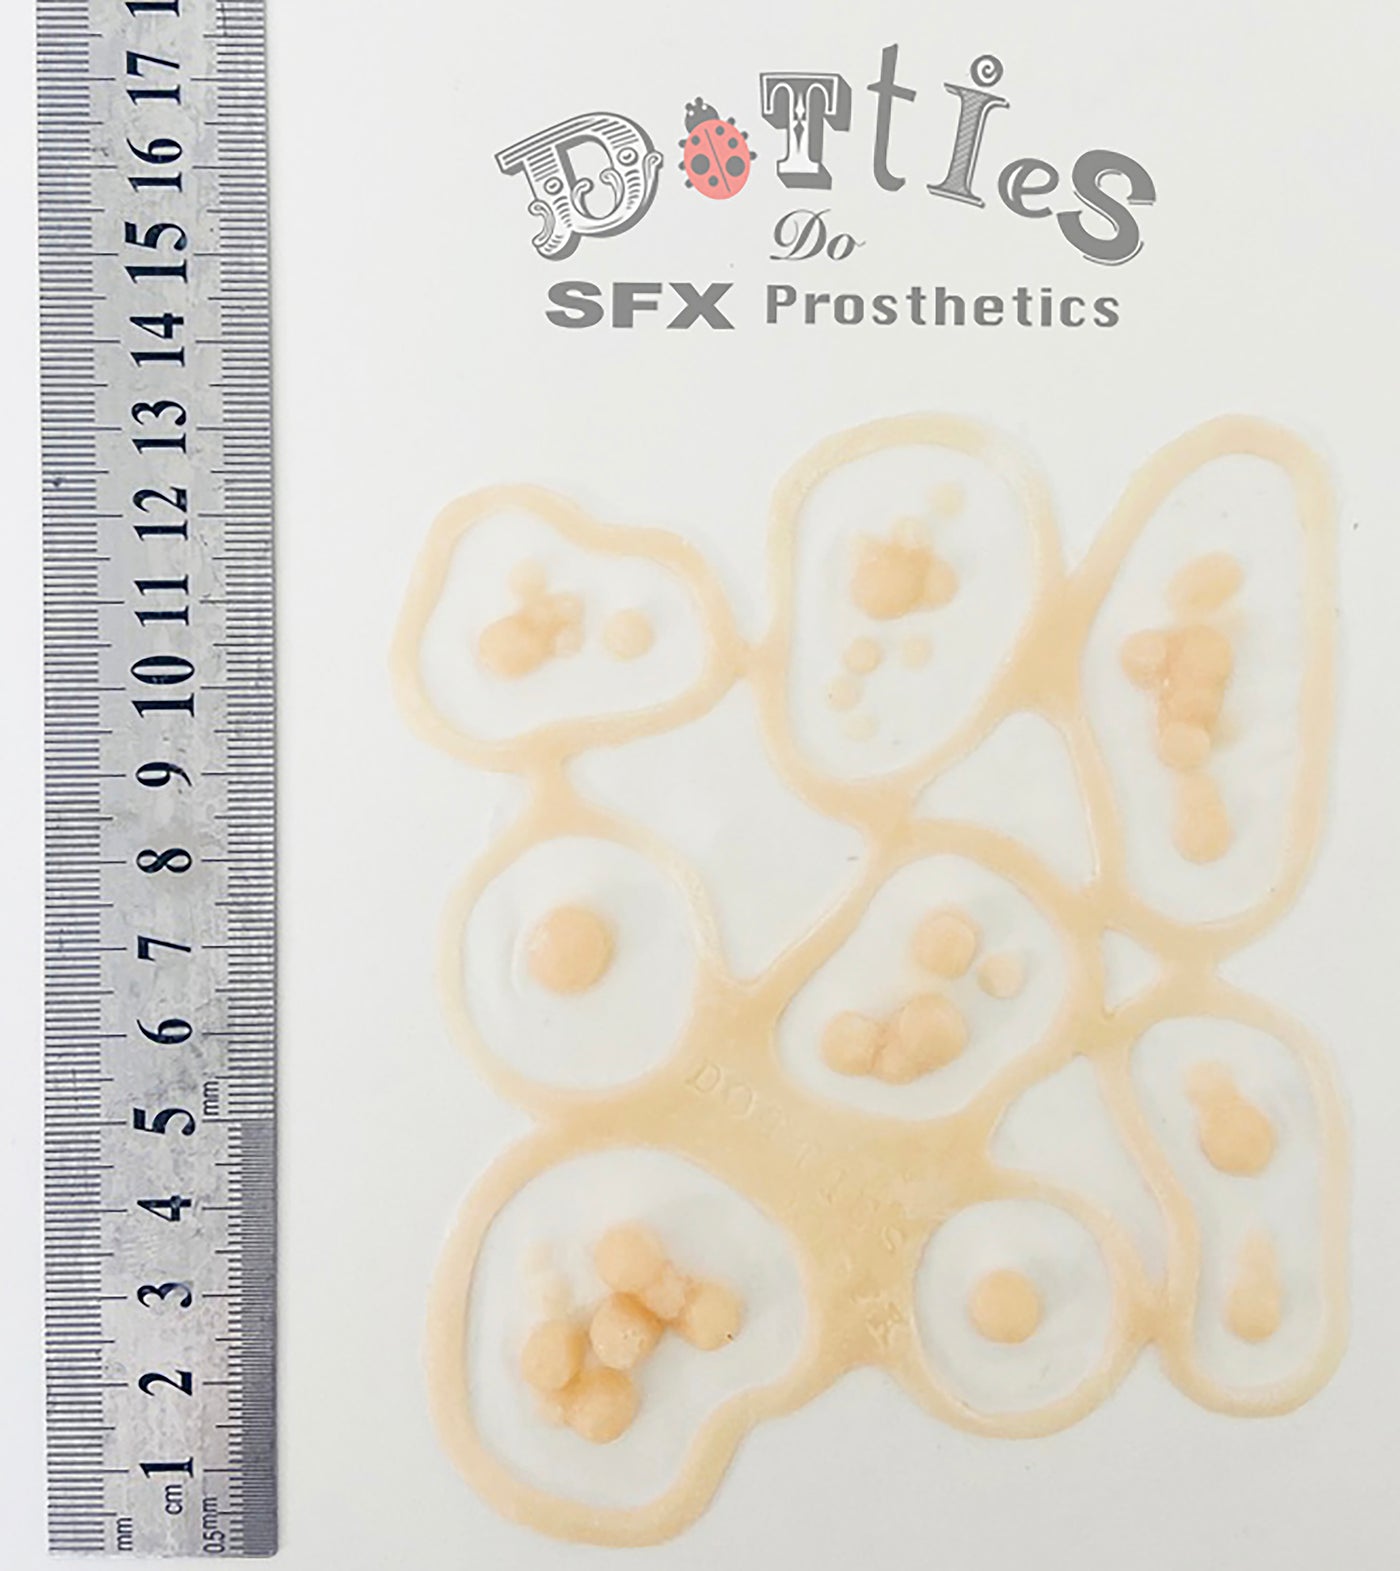 8 pieces Unpainted Silicone Prosthetic, boils, disease, infection